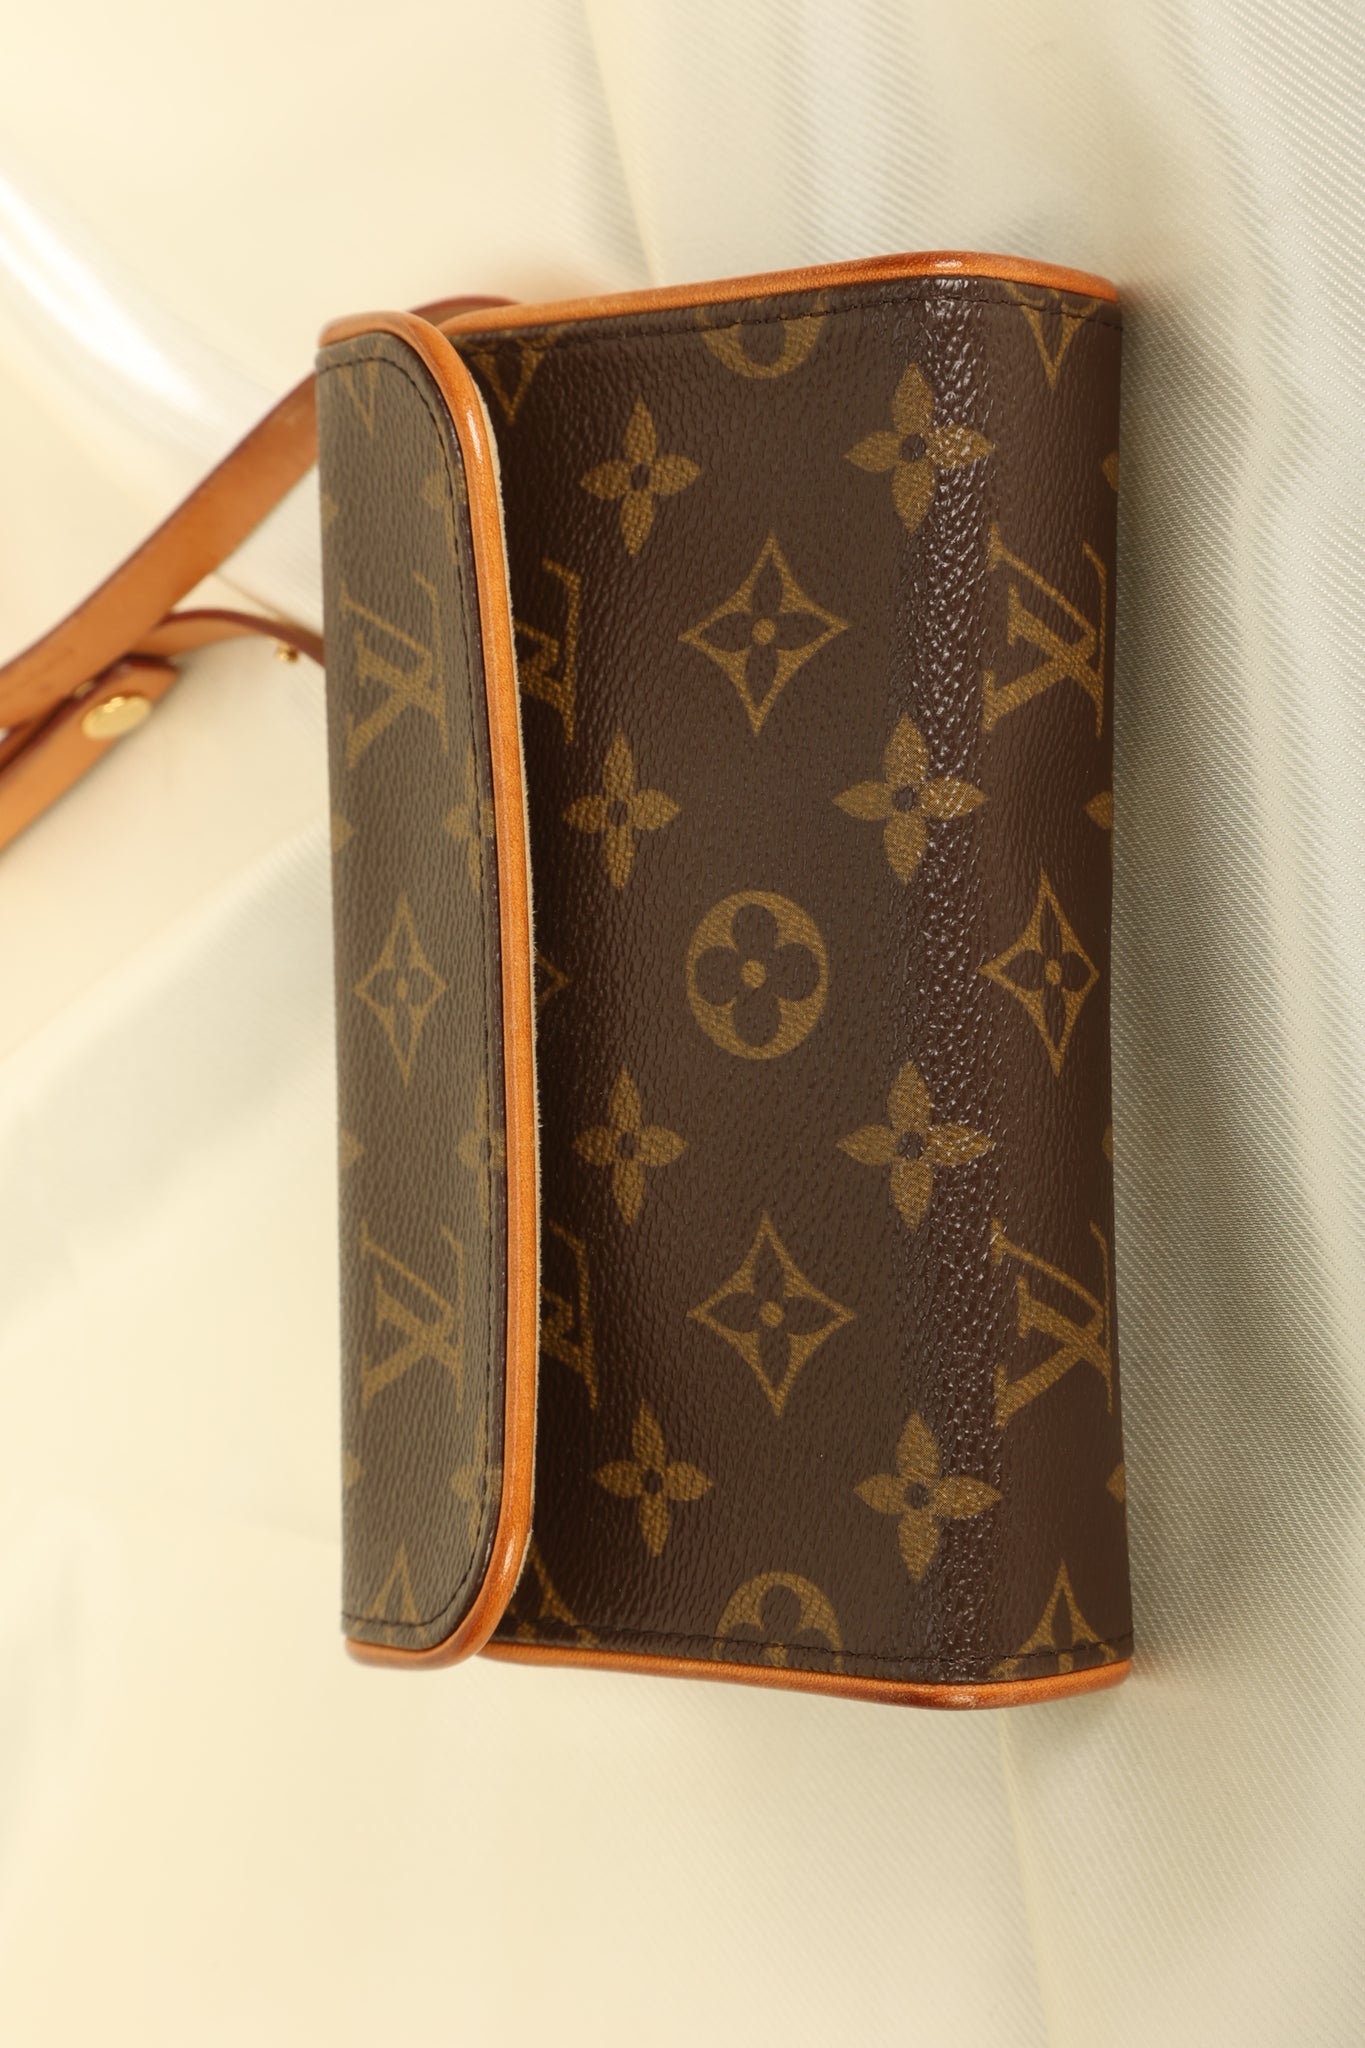 Louis Vuitton Mini Belt Bag